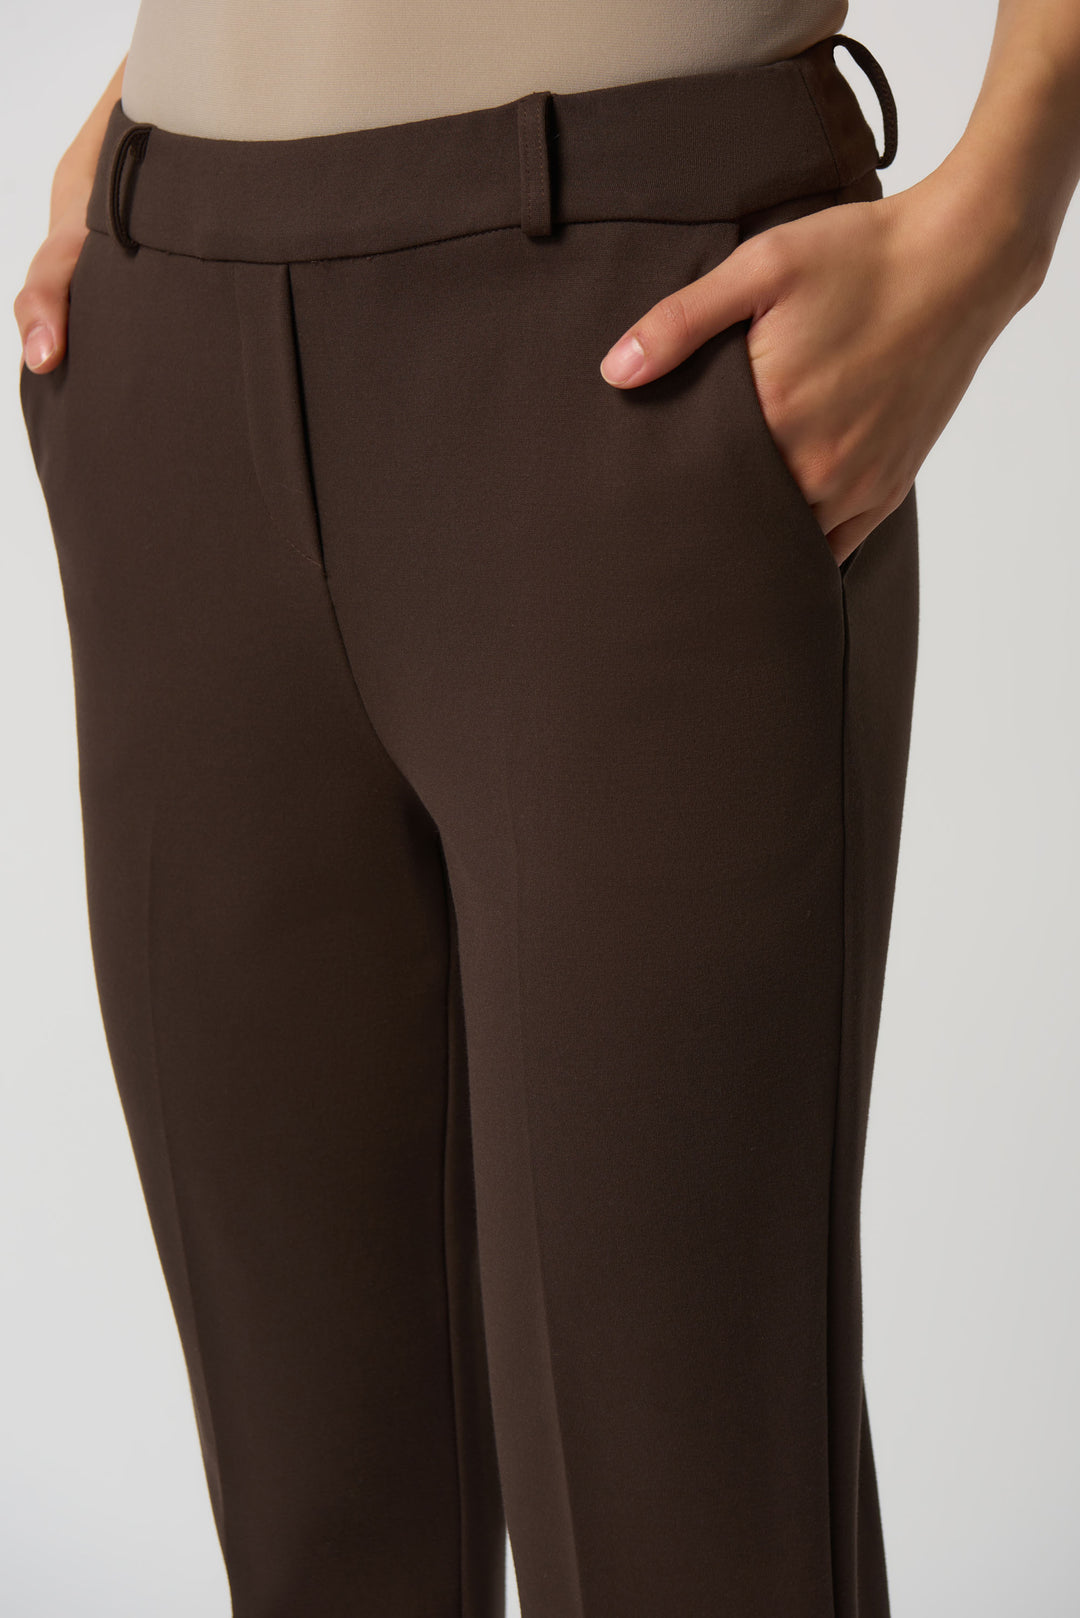 Joseph Ribkoff Fall 2023 women's business casual heavy knit cropped dress pants with pockets - mocha detail